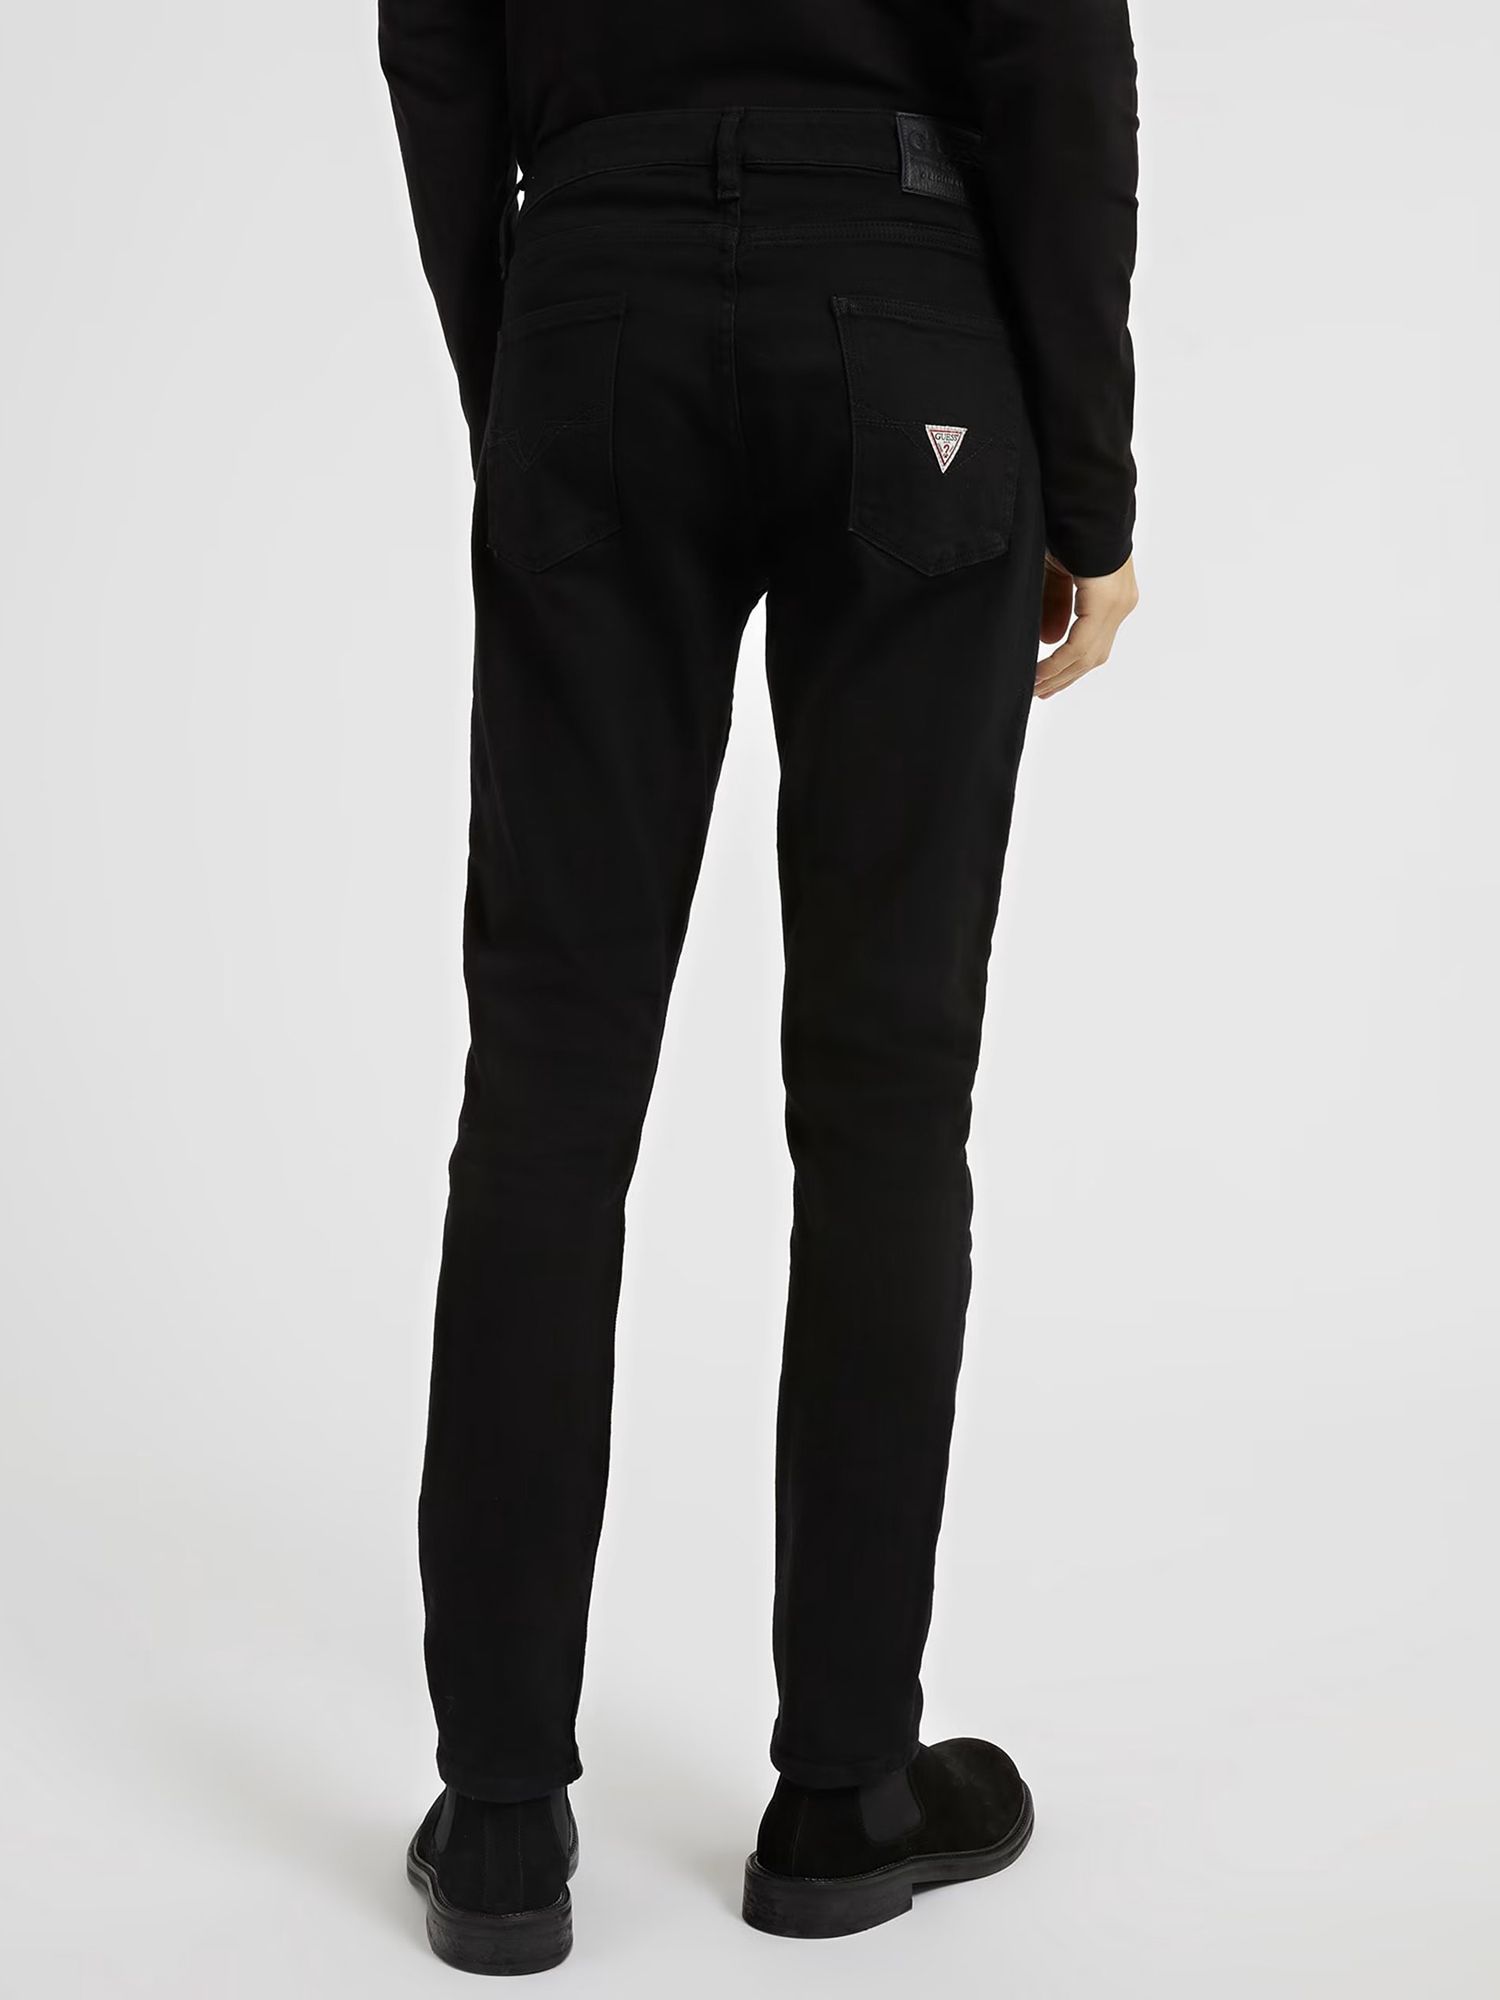 GUESS Chris Skinny Fit Denim Jeans, Carry Black at John Lewis & Partners